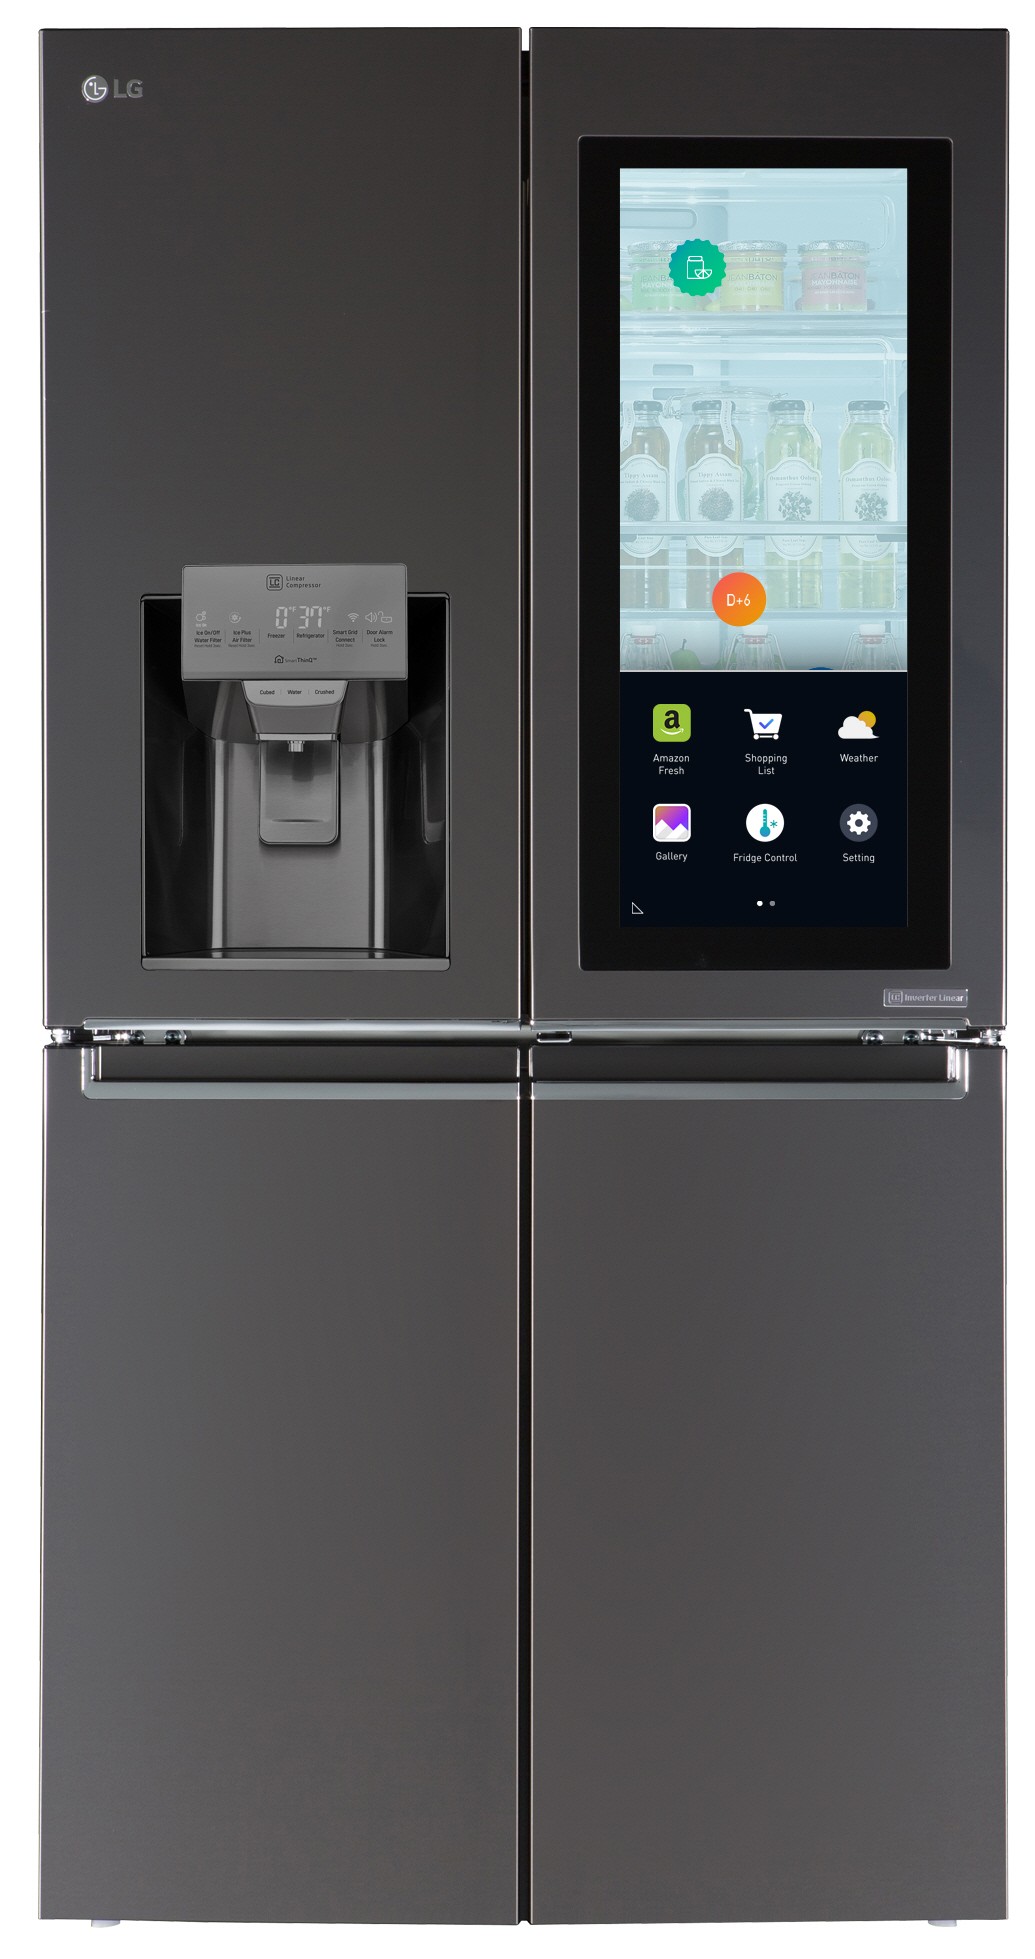 LG-Smart-Instaview-Refrigerator-01